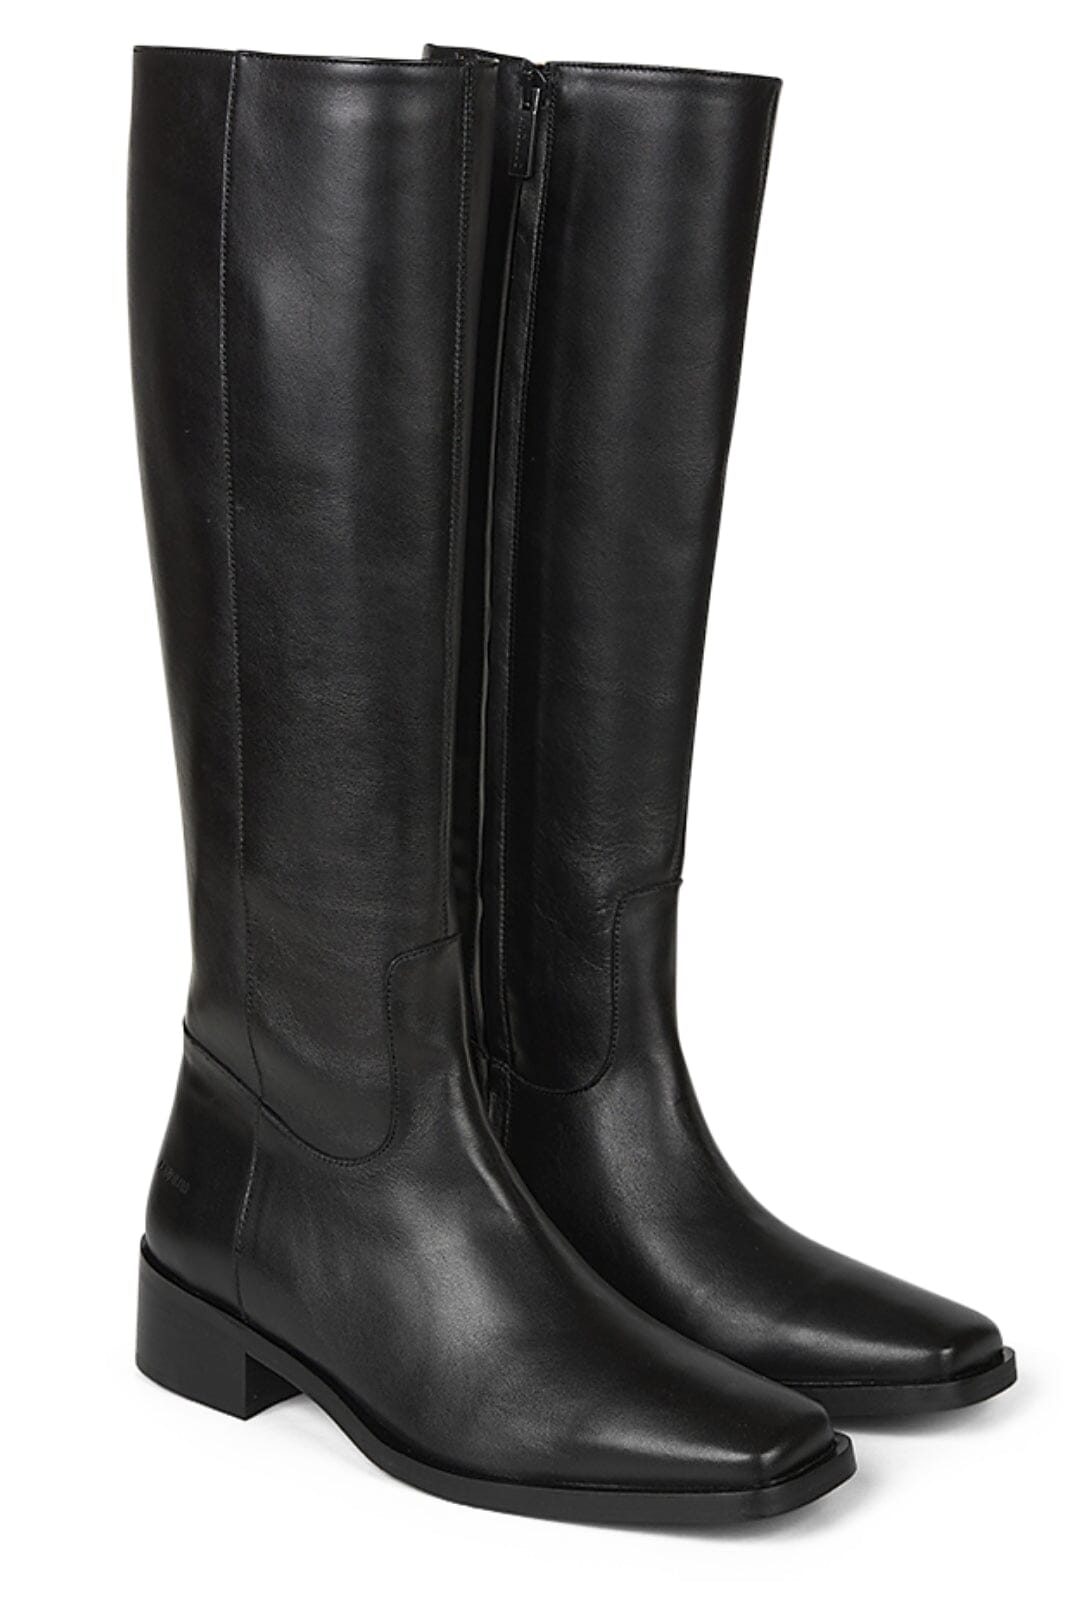 Angulus - High-leg boot with zipper - 1604 Black Støvler 